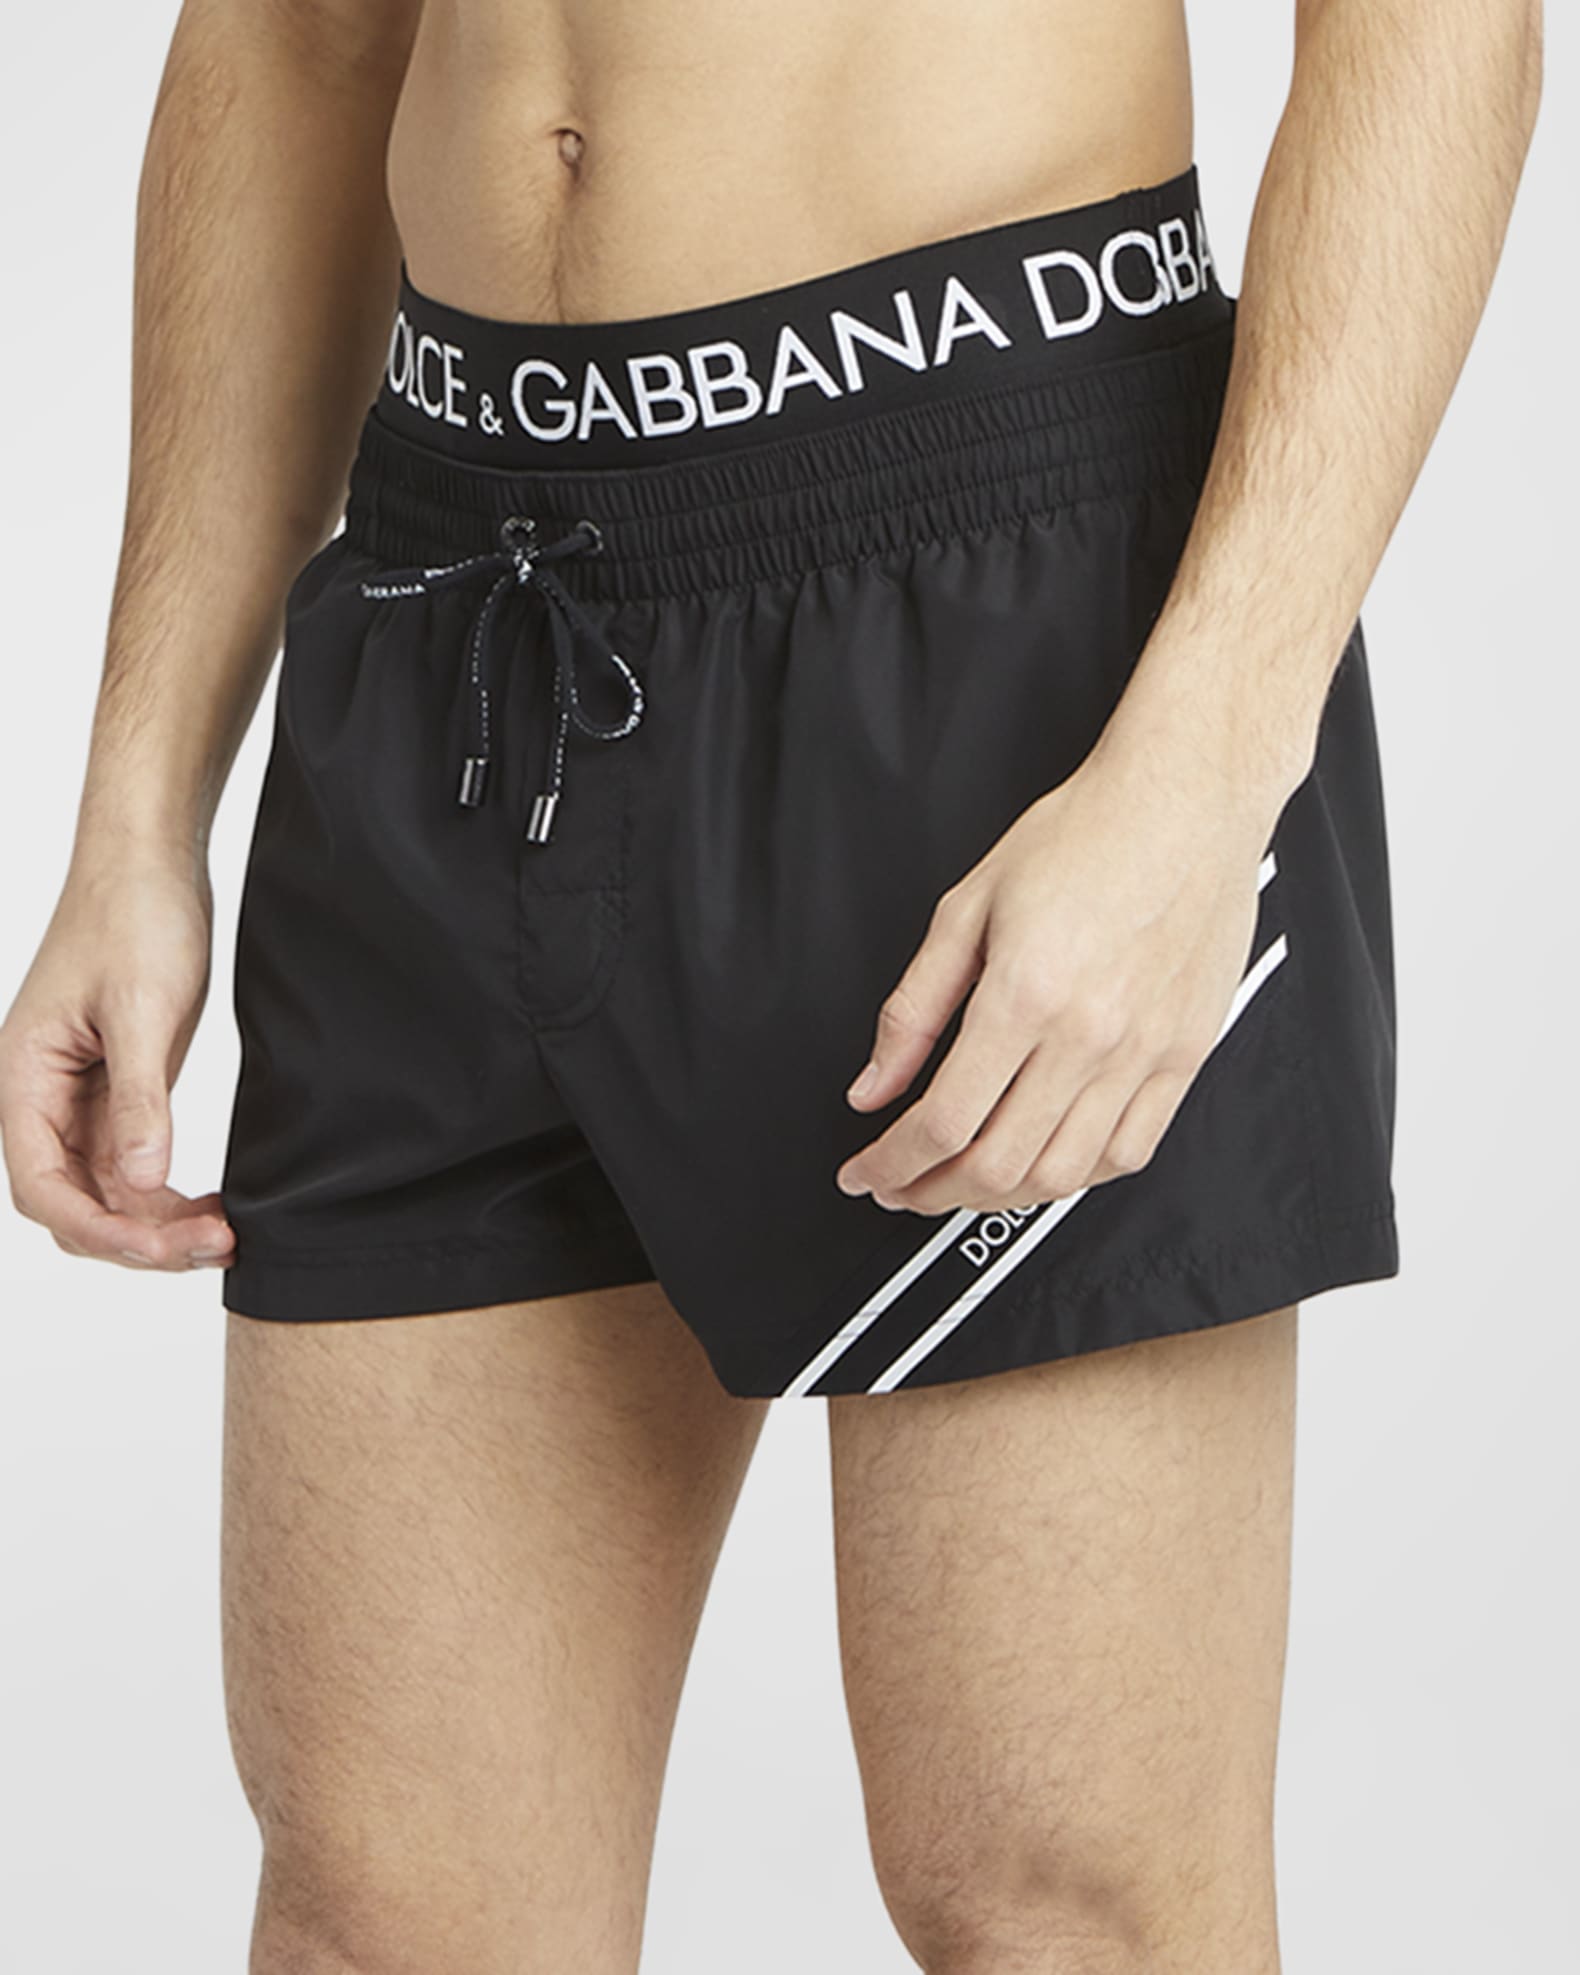 Dolce&Gabbana Men's Swim Shorts with DG Logo Waist | Neiman Marcus